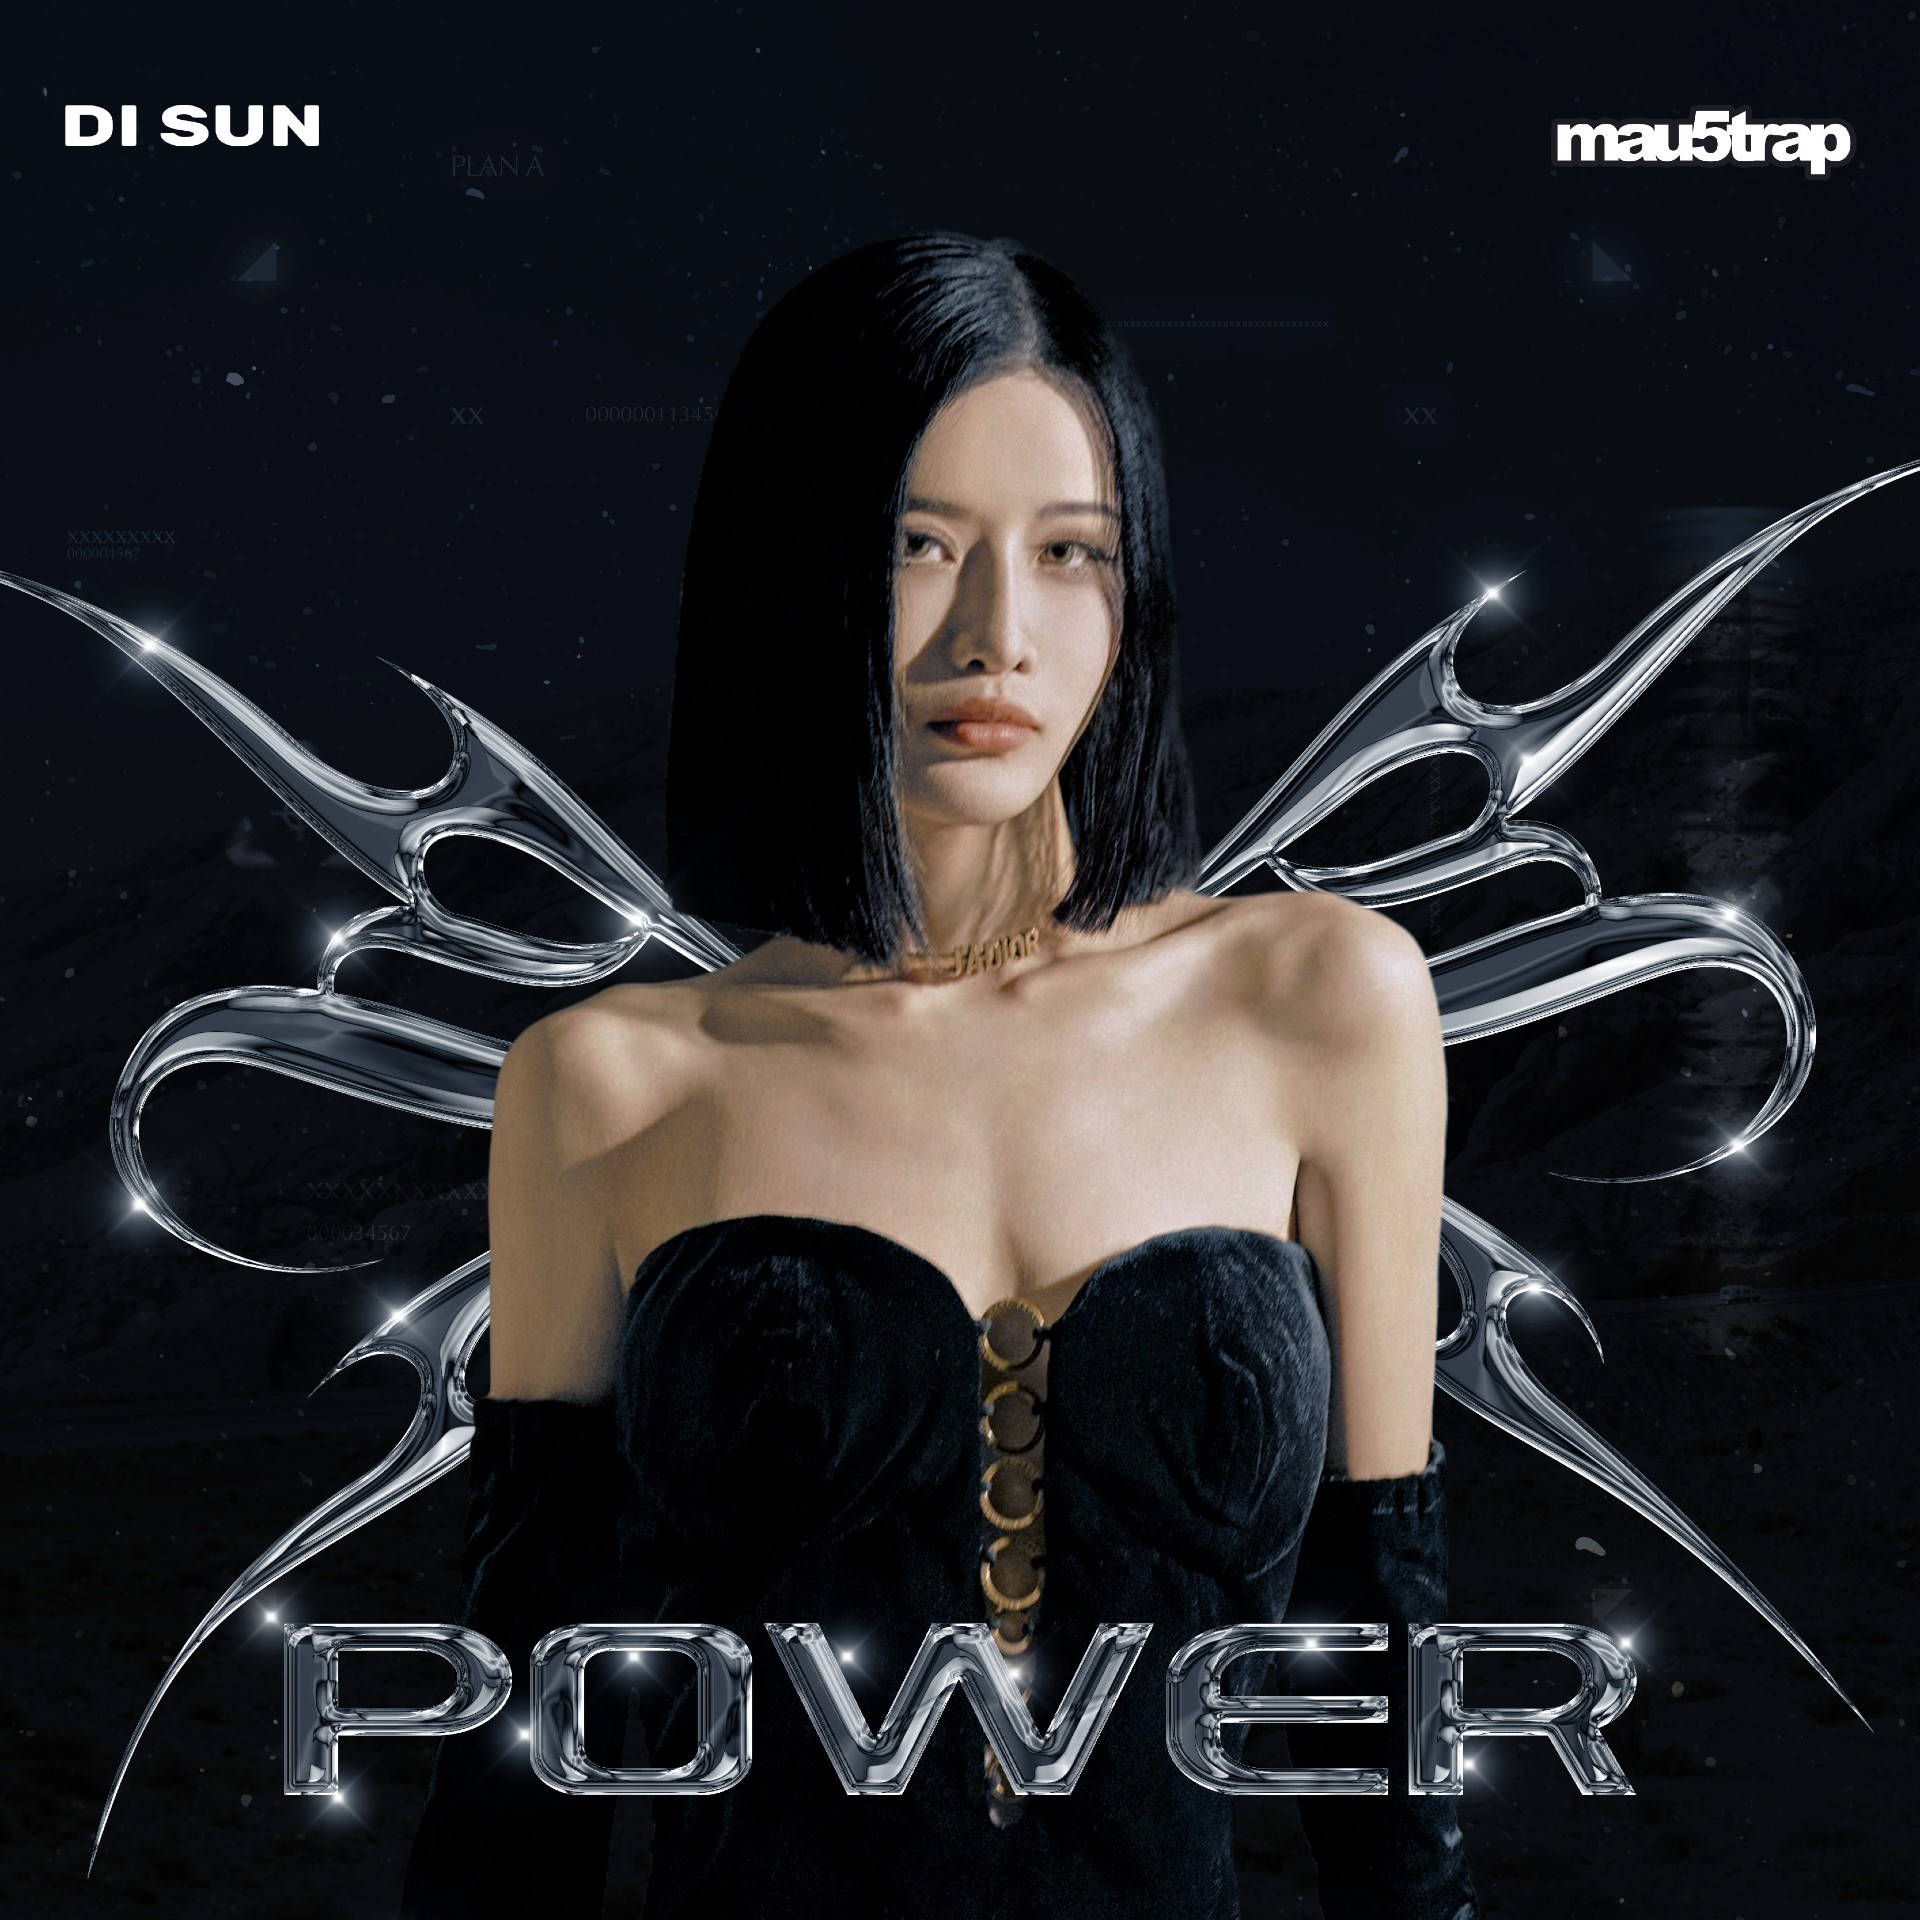 DI SUN “Power” single artwork